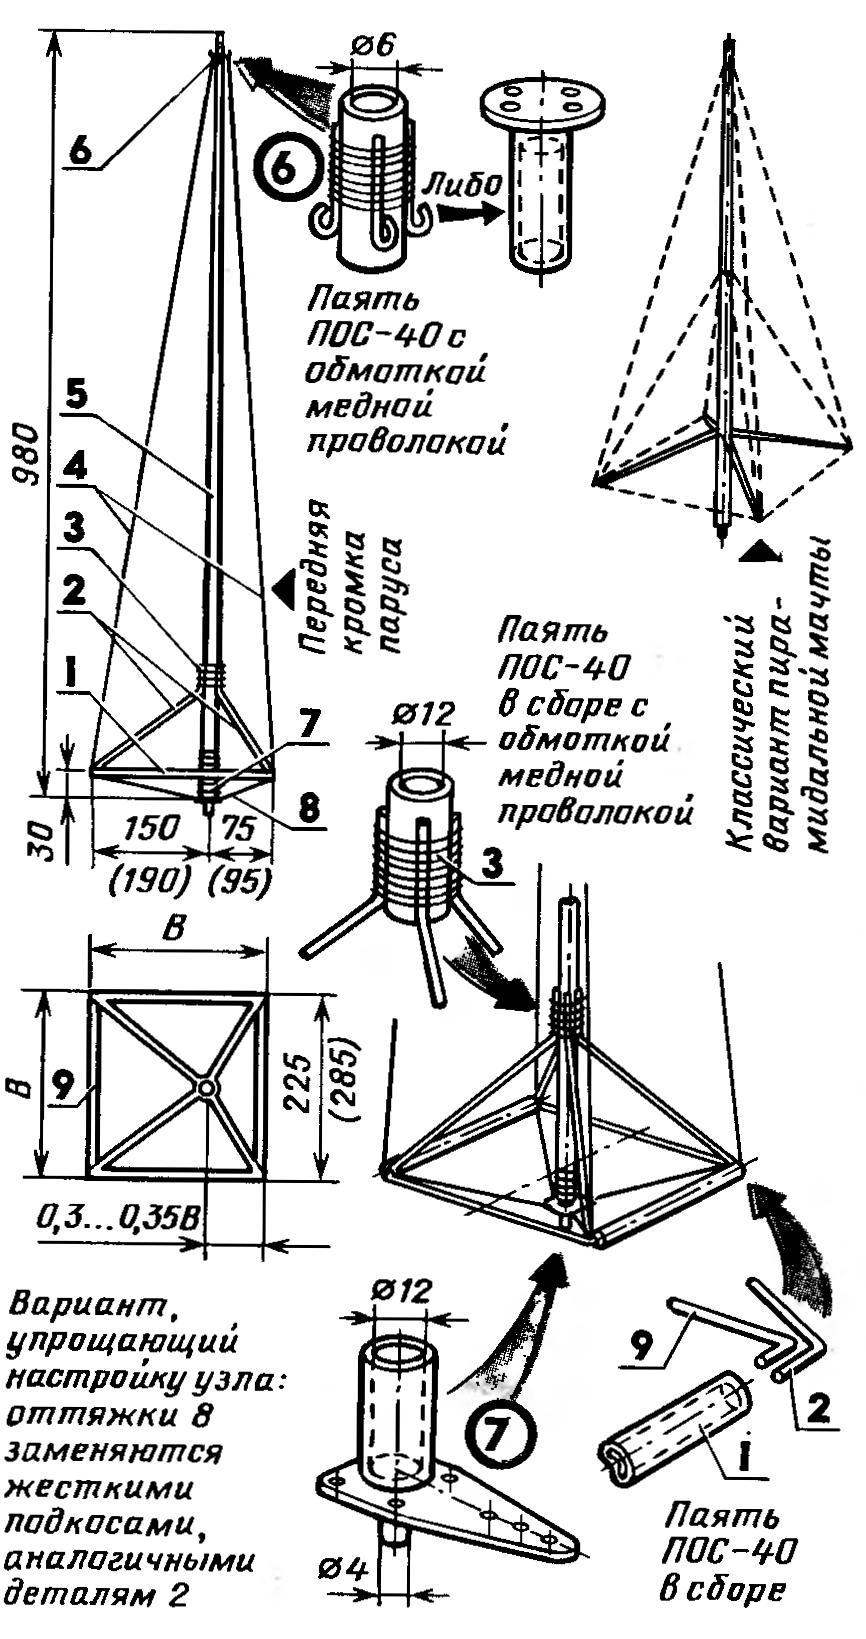 Fig. 2. Mast system pyramidal sailing arms